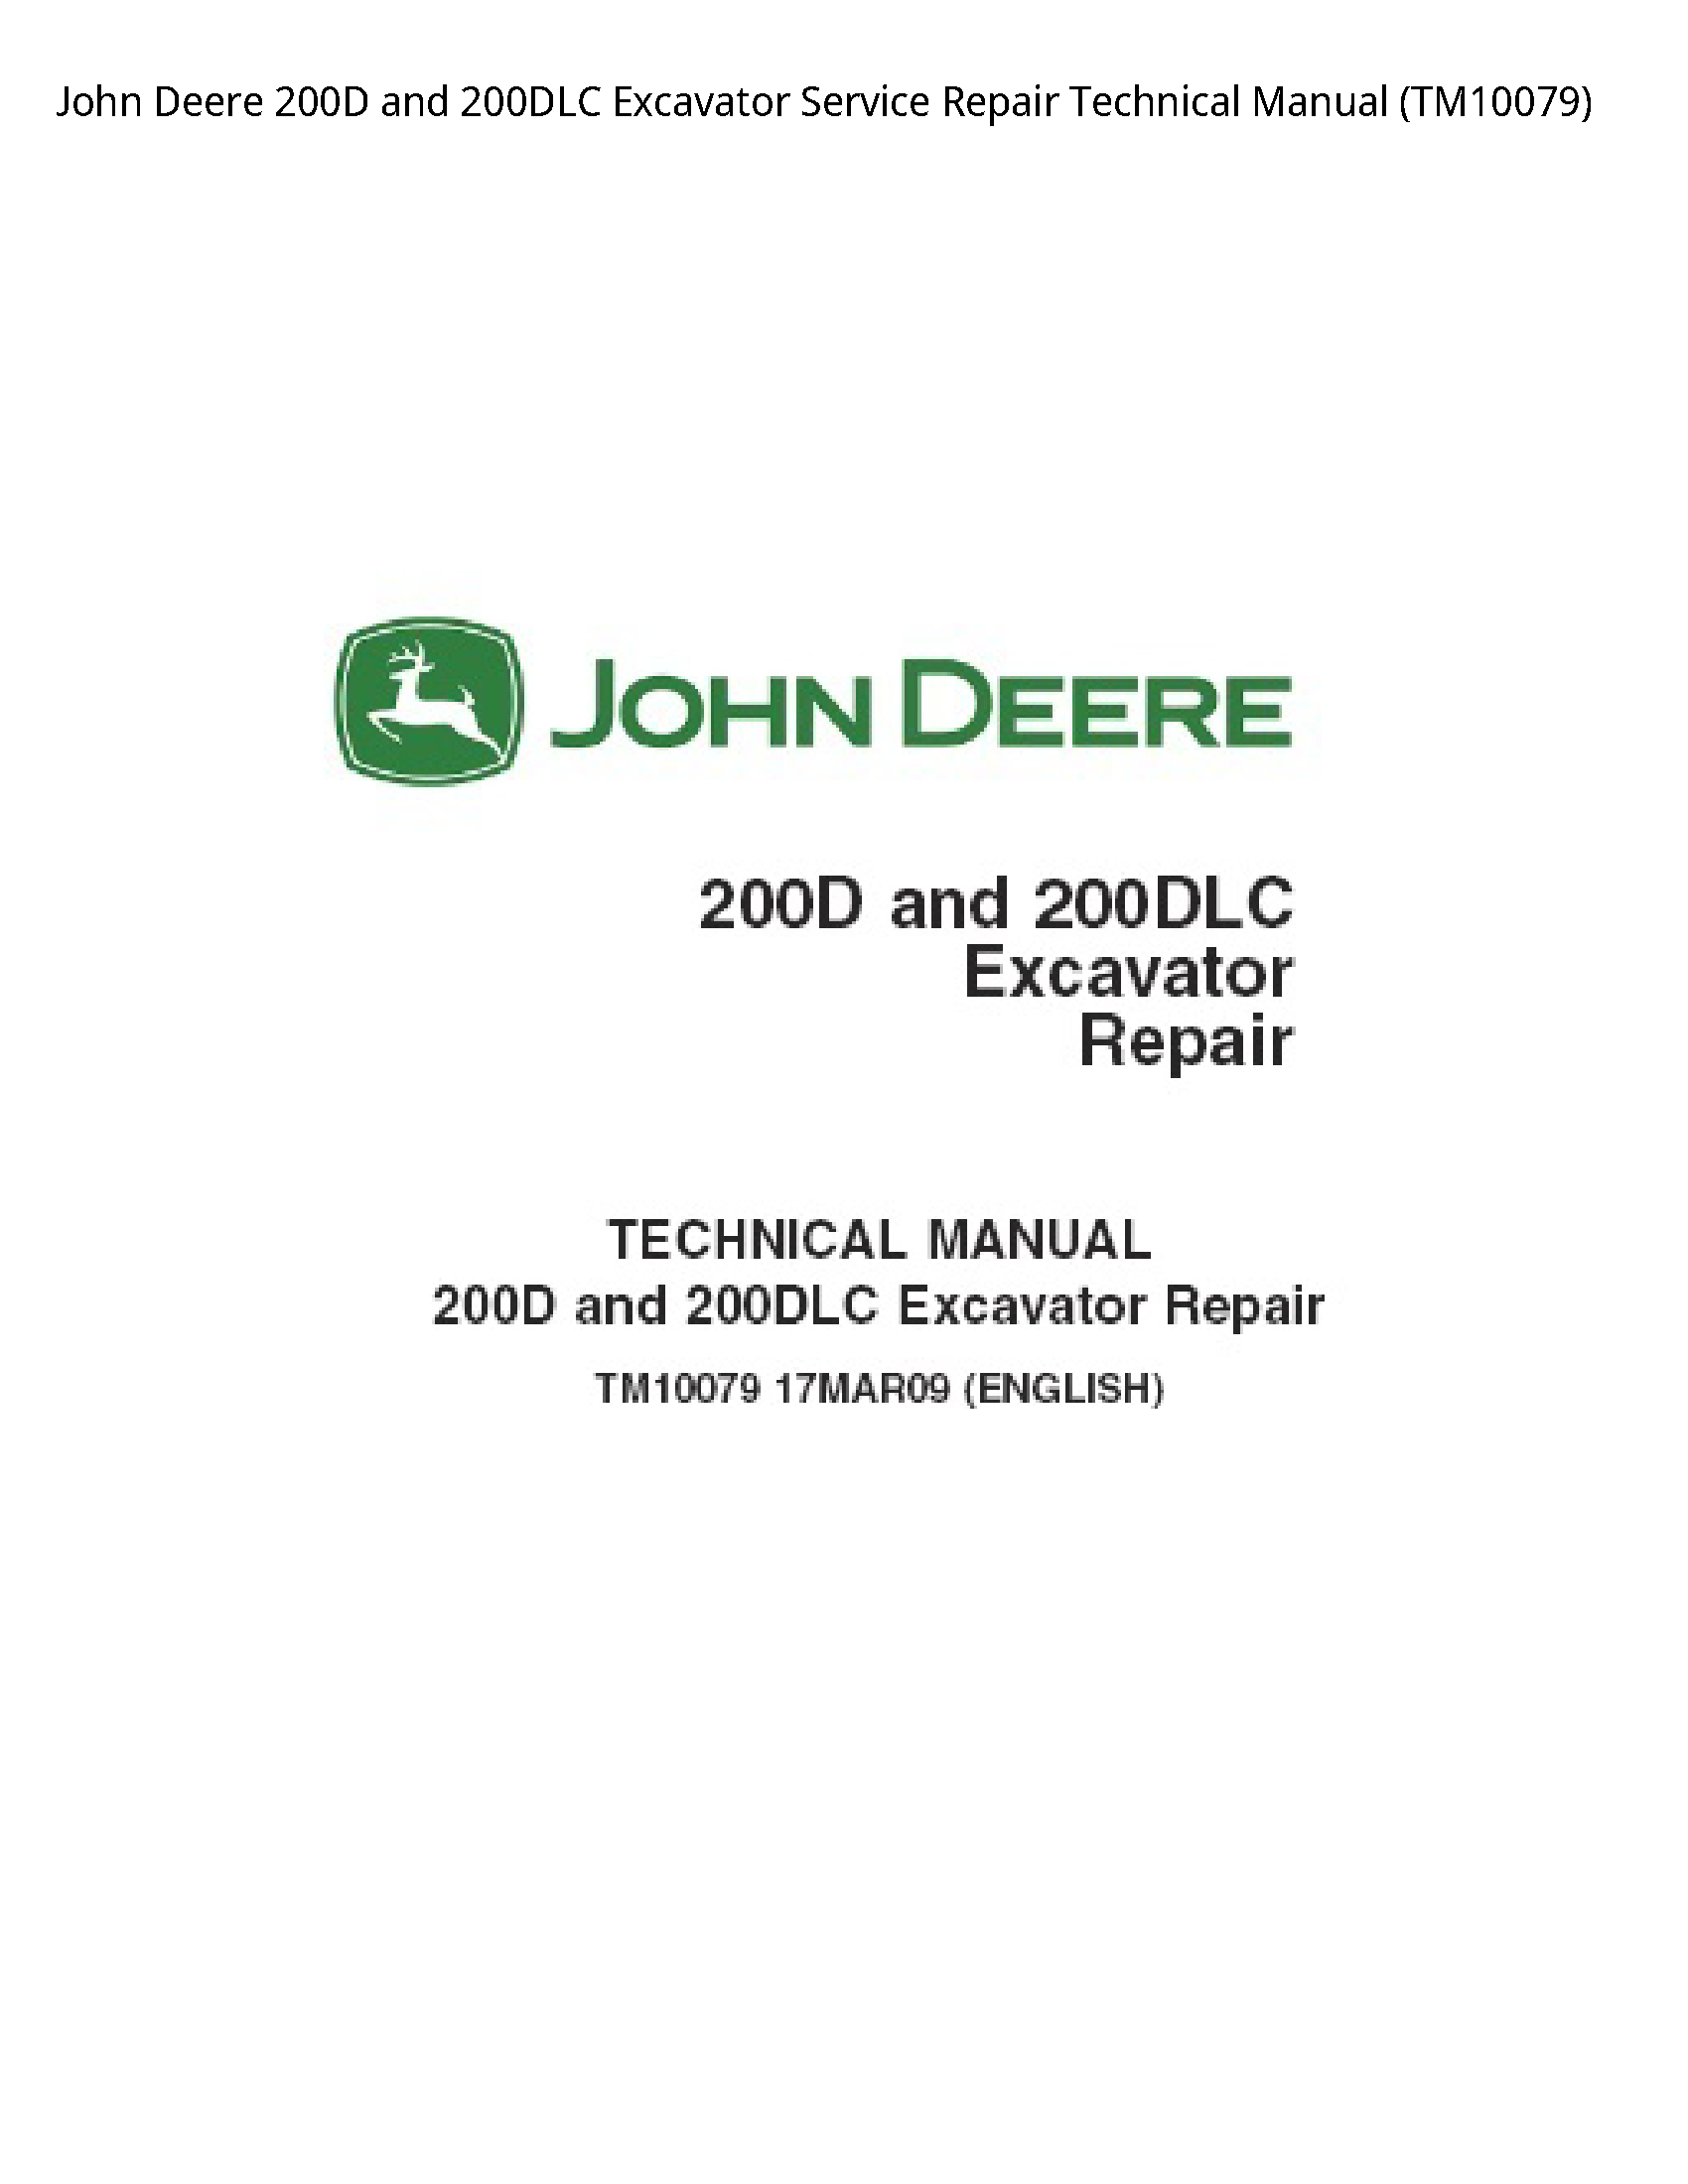 John Deere 200D  Excavator manual